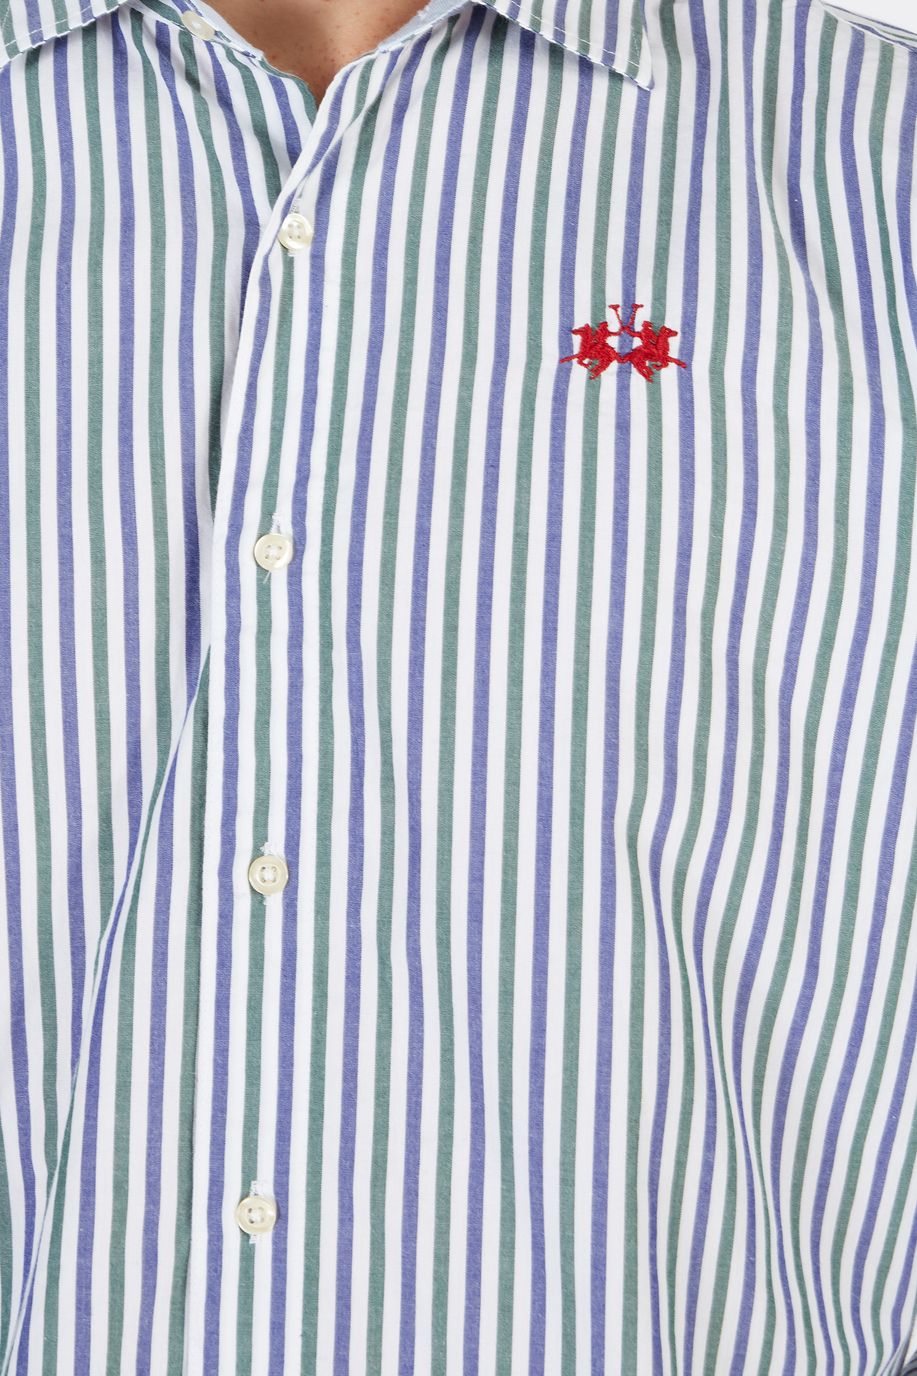 Men's short-sleeved shirt in 100% cotton